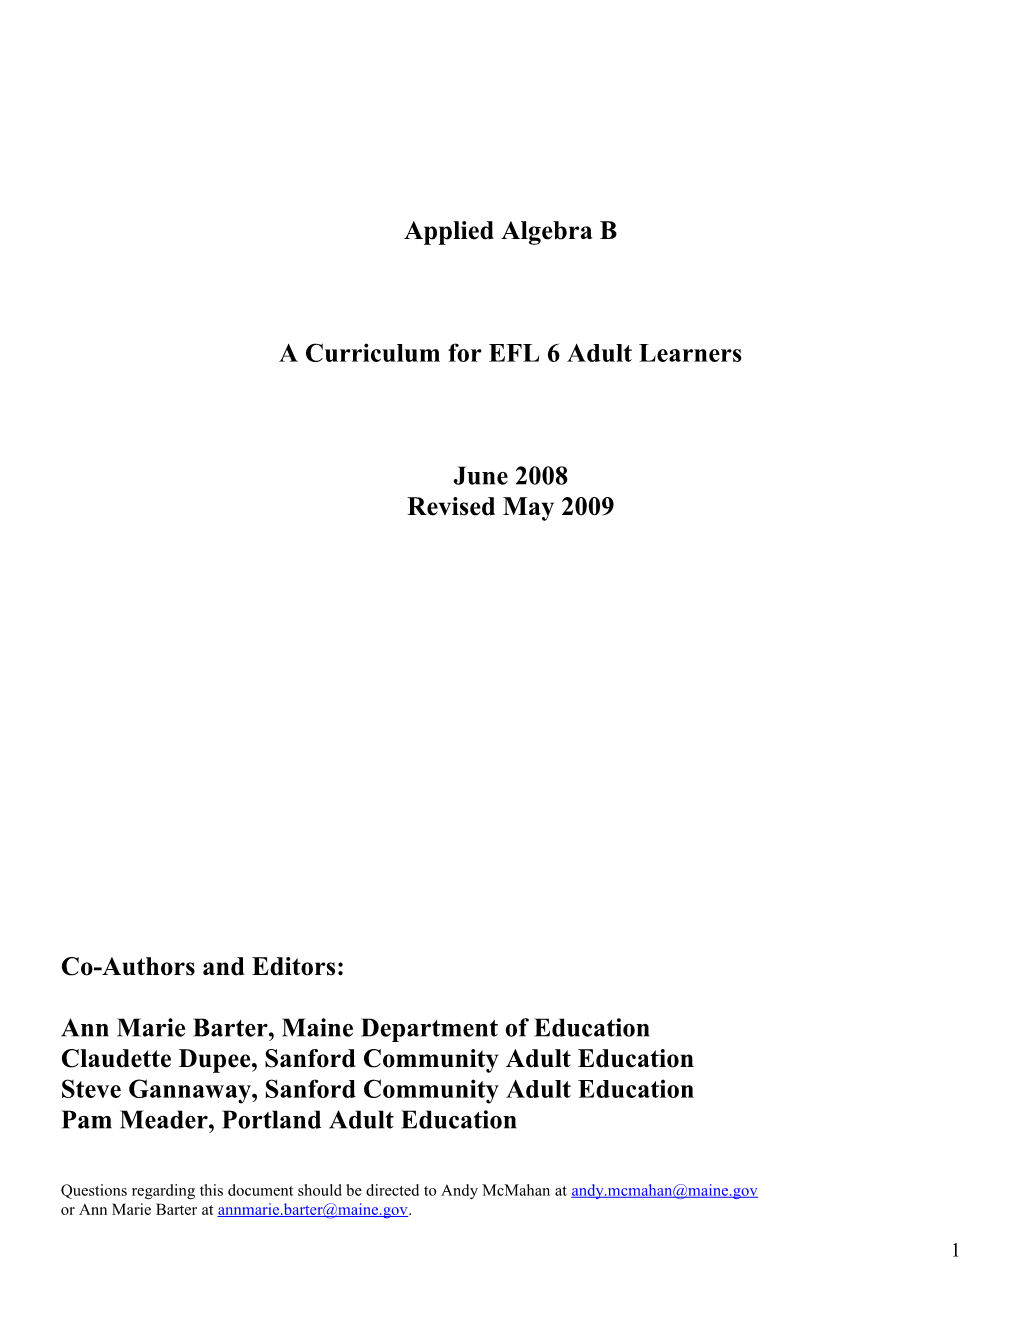 EFL 6 Math Curriculum